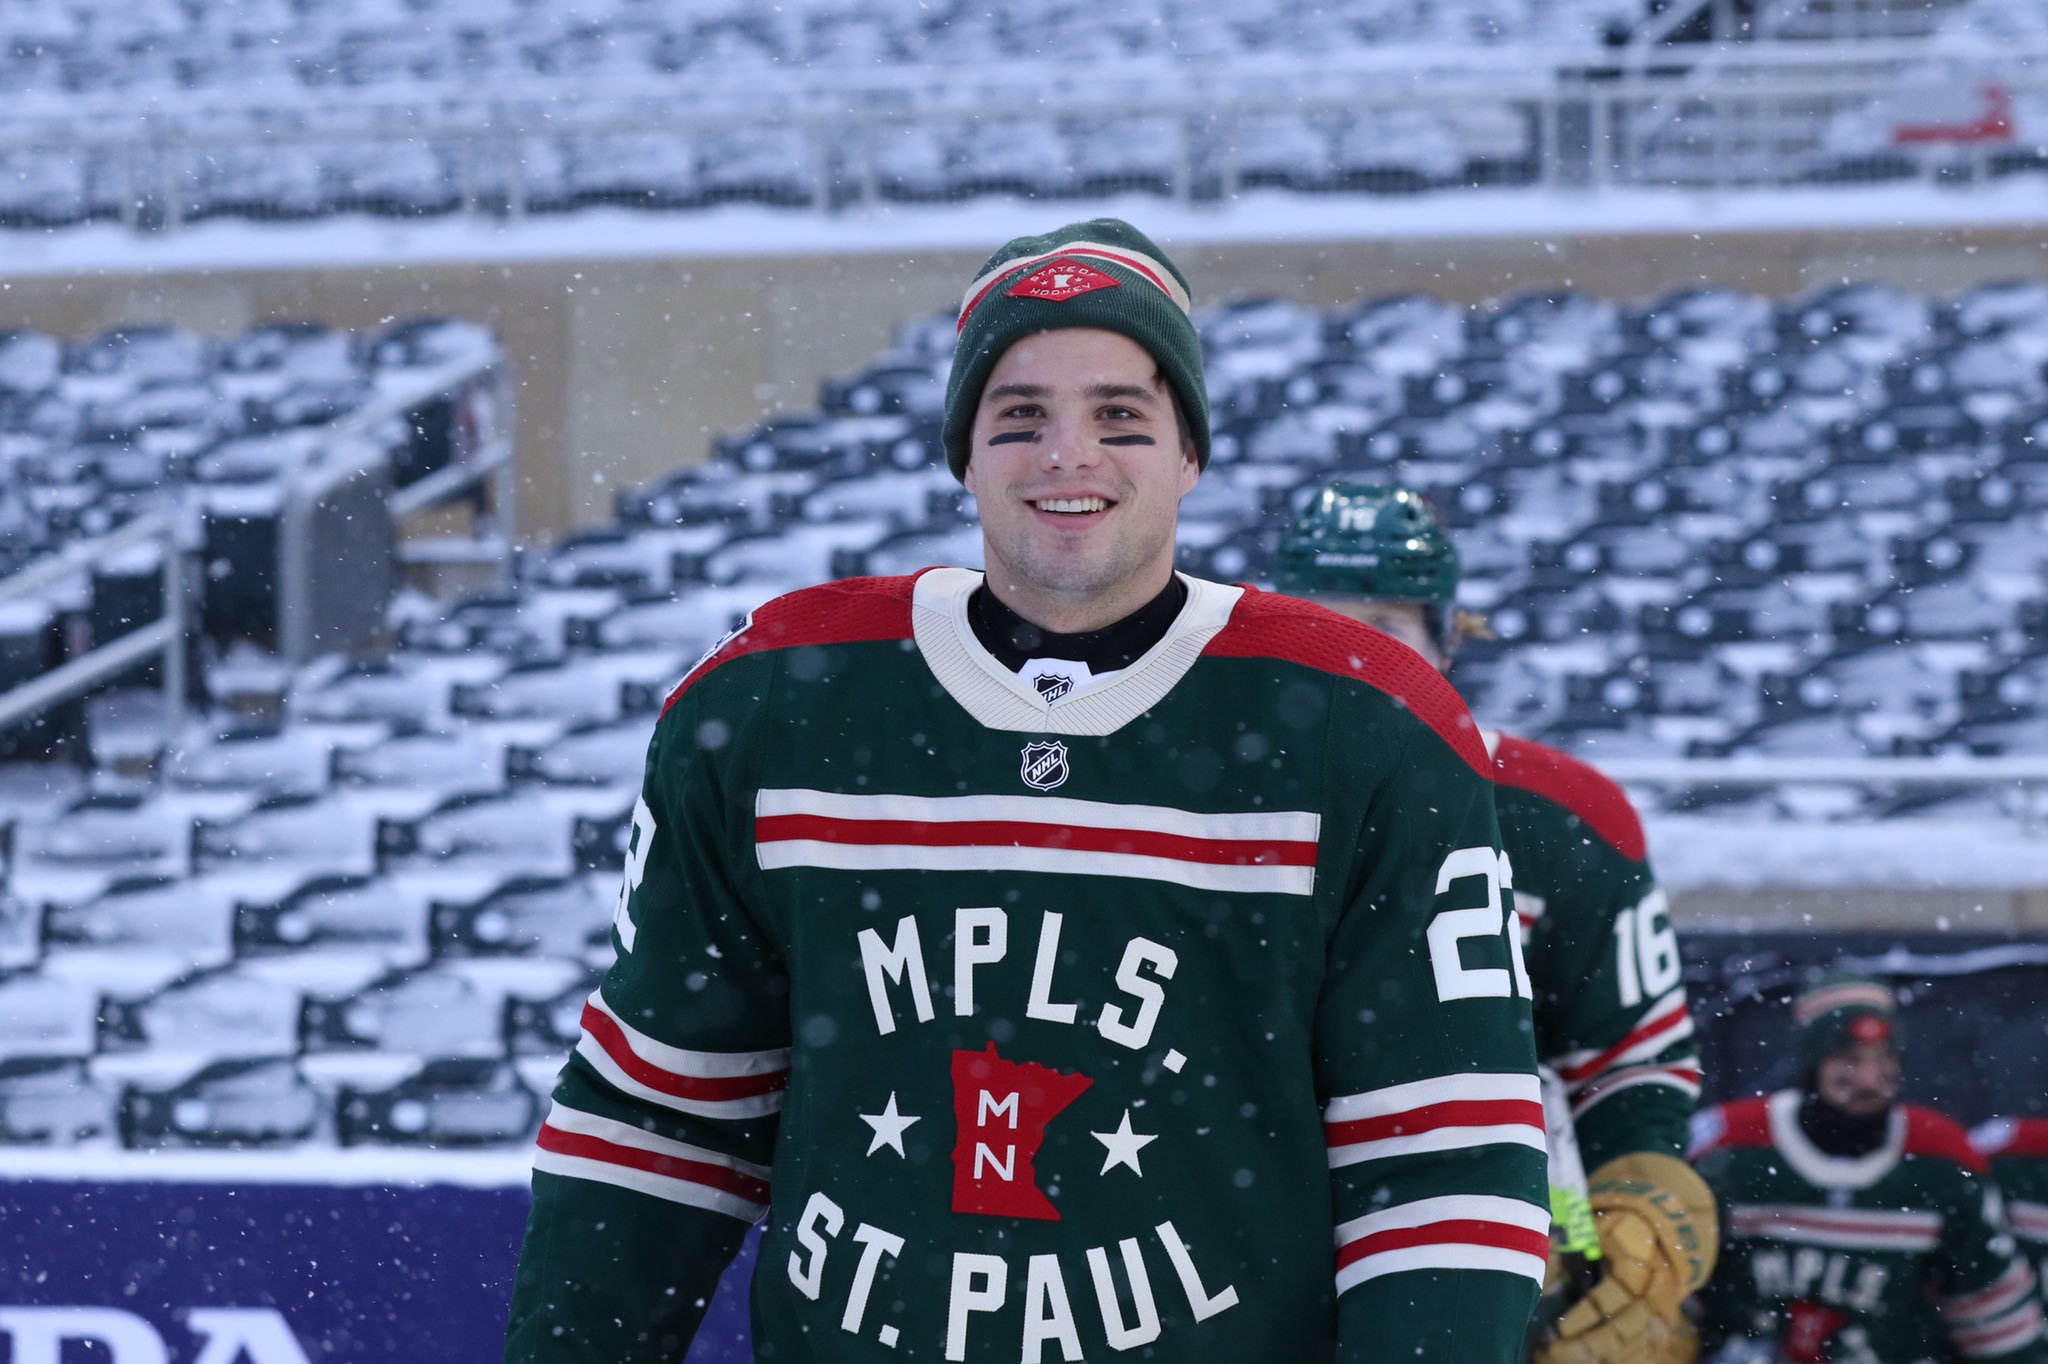 Minnesota Wild Unveil “State of Hockey” Themed 2022 Winter Classic Uniforms  – SportsLogos.Net News